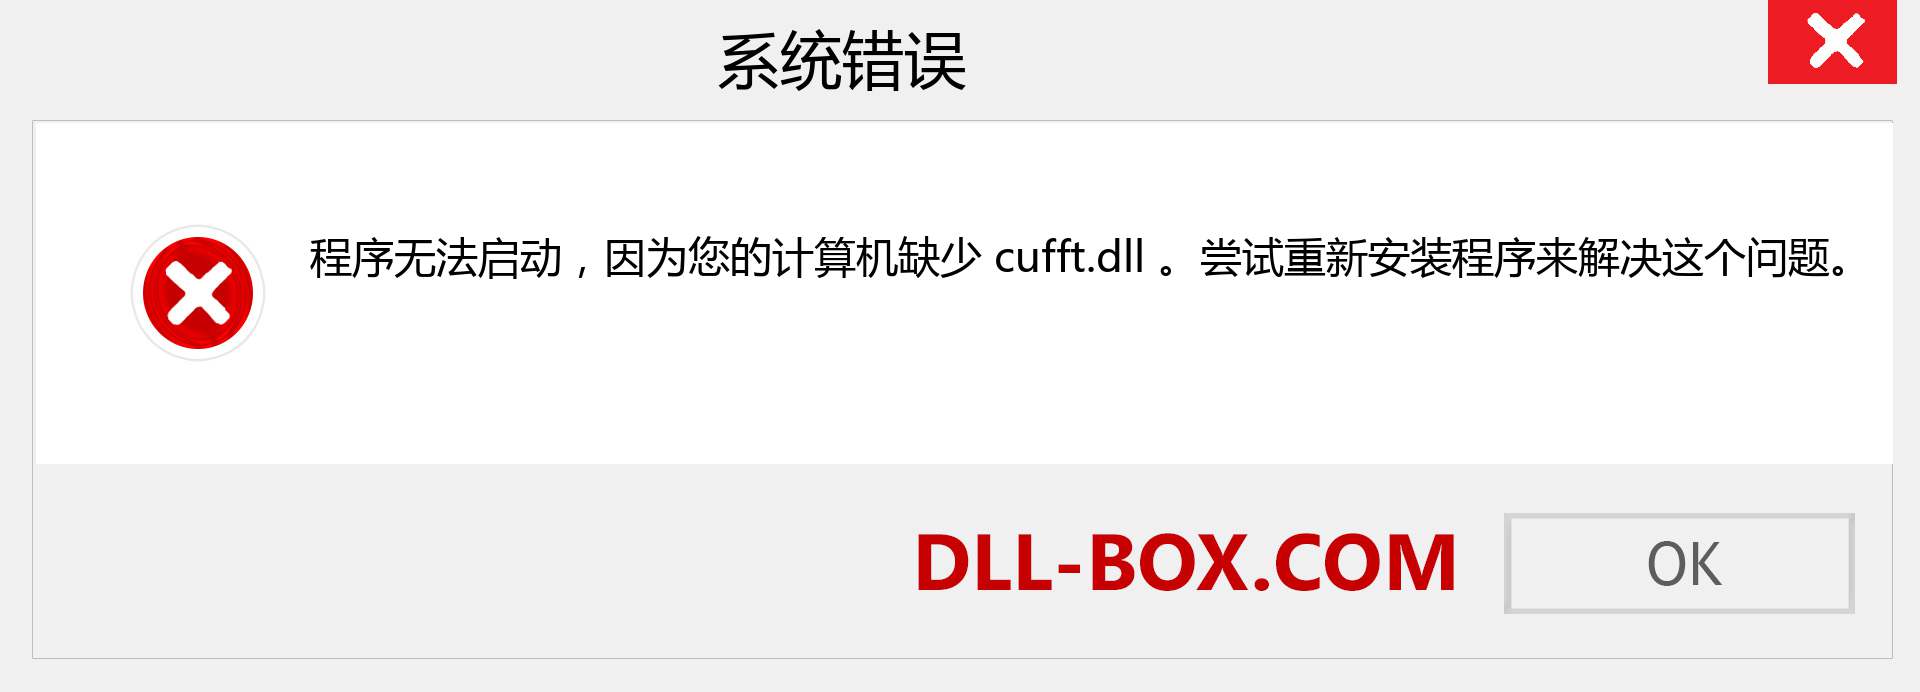 cufft.dll 文件丢失？。 适用于 Windows 7、8、10 的下载 - 修复 Windows、照片、图像上的 cufft dll 丢失错误